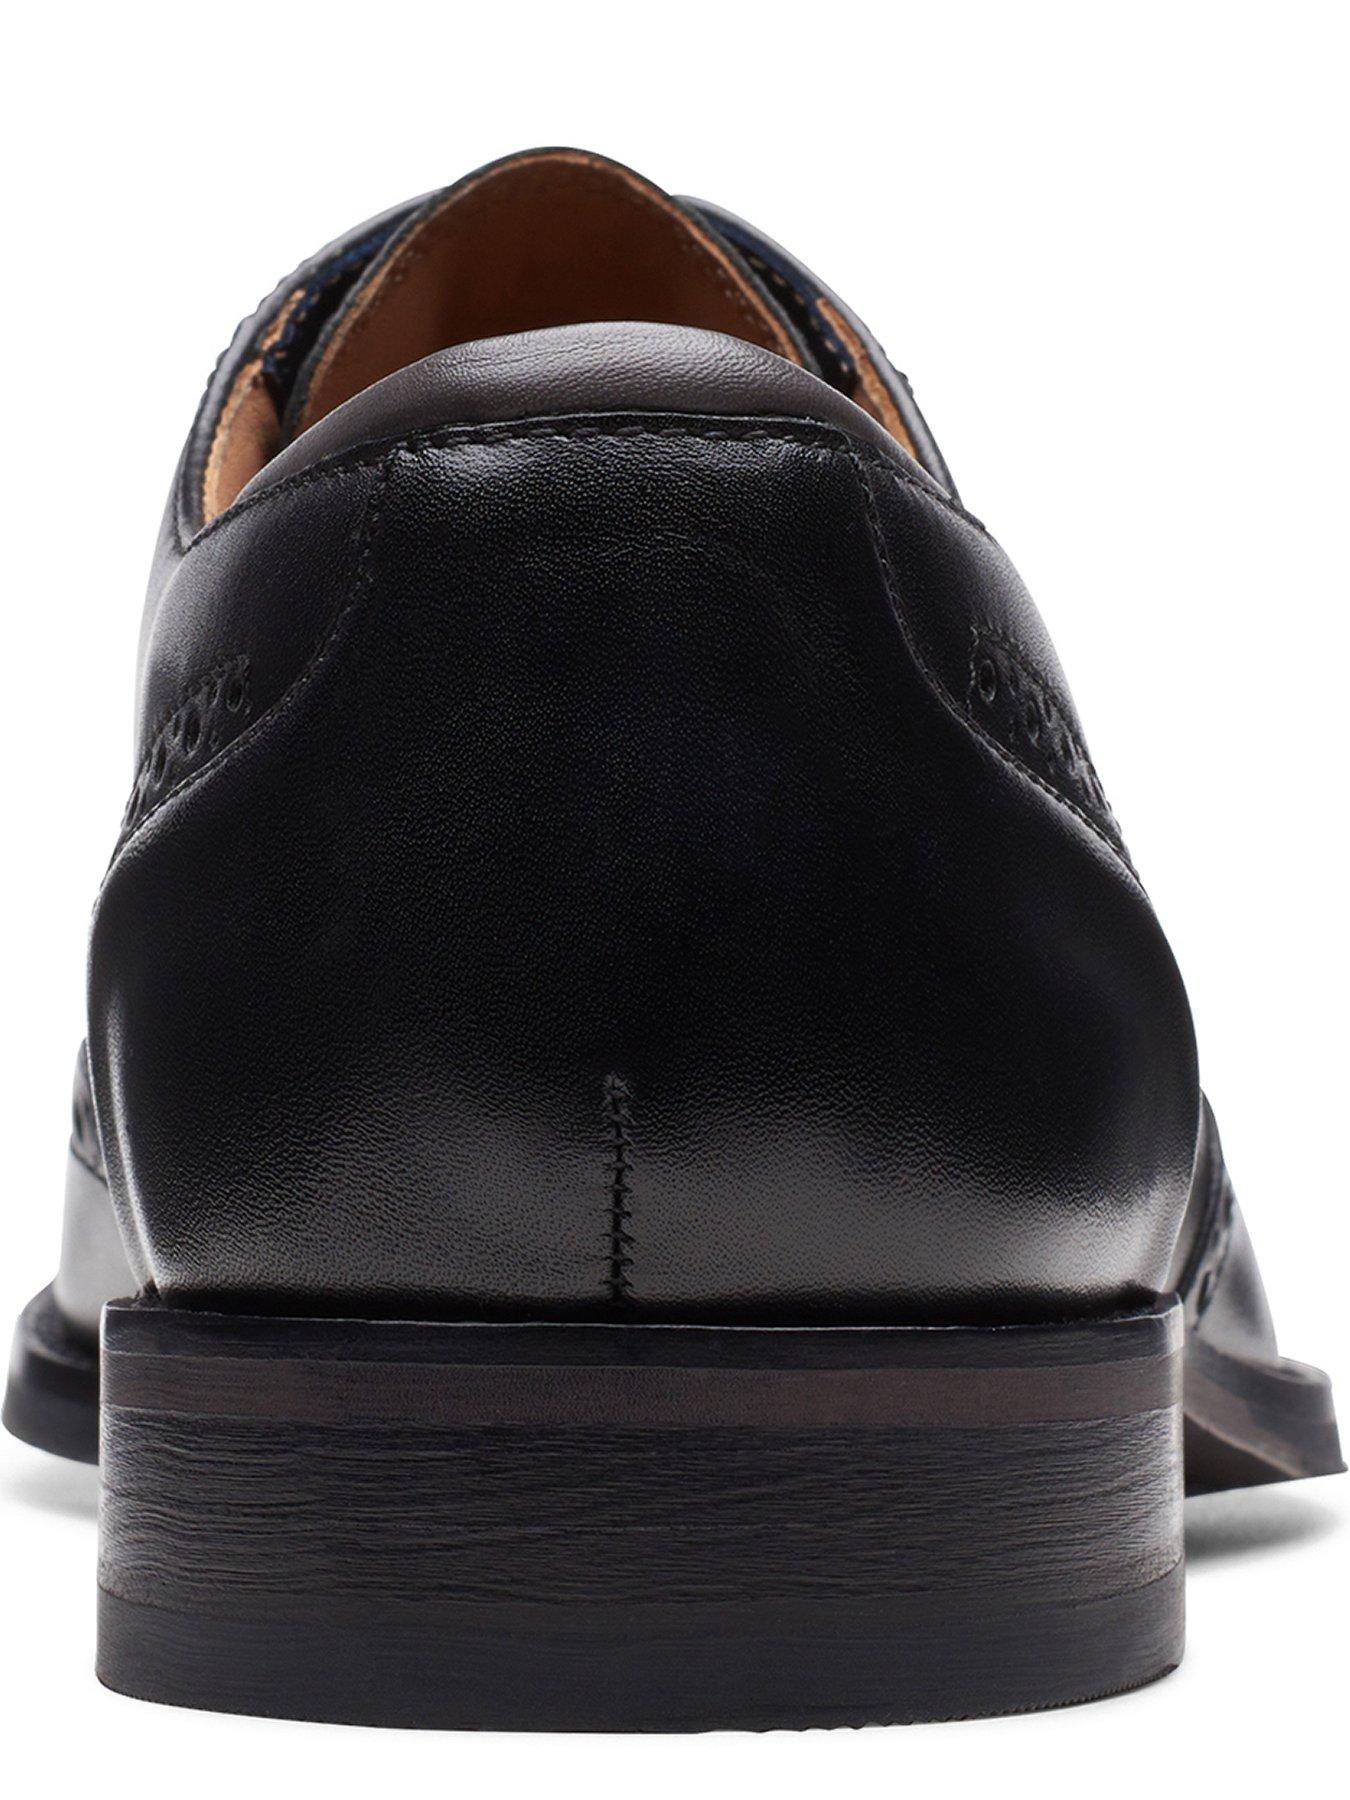 Clarks Craft Arlo Limit Brogue Shoes - Black | littlewoods.com